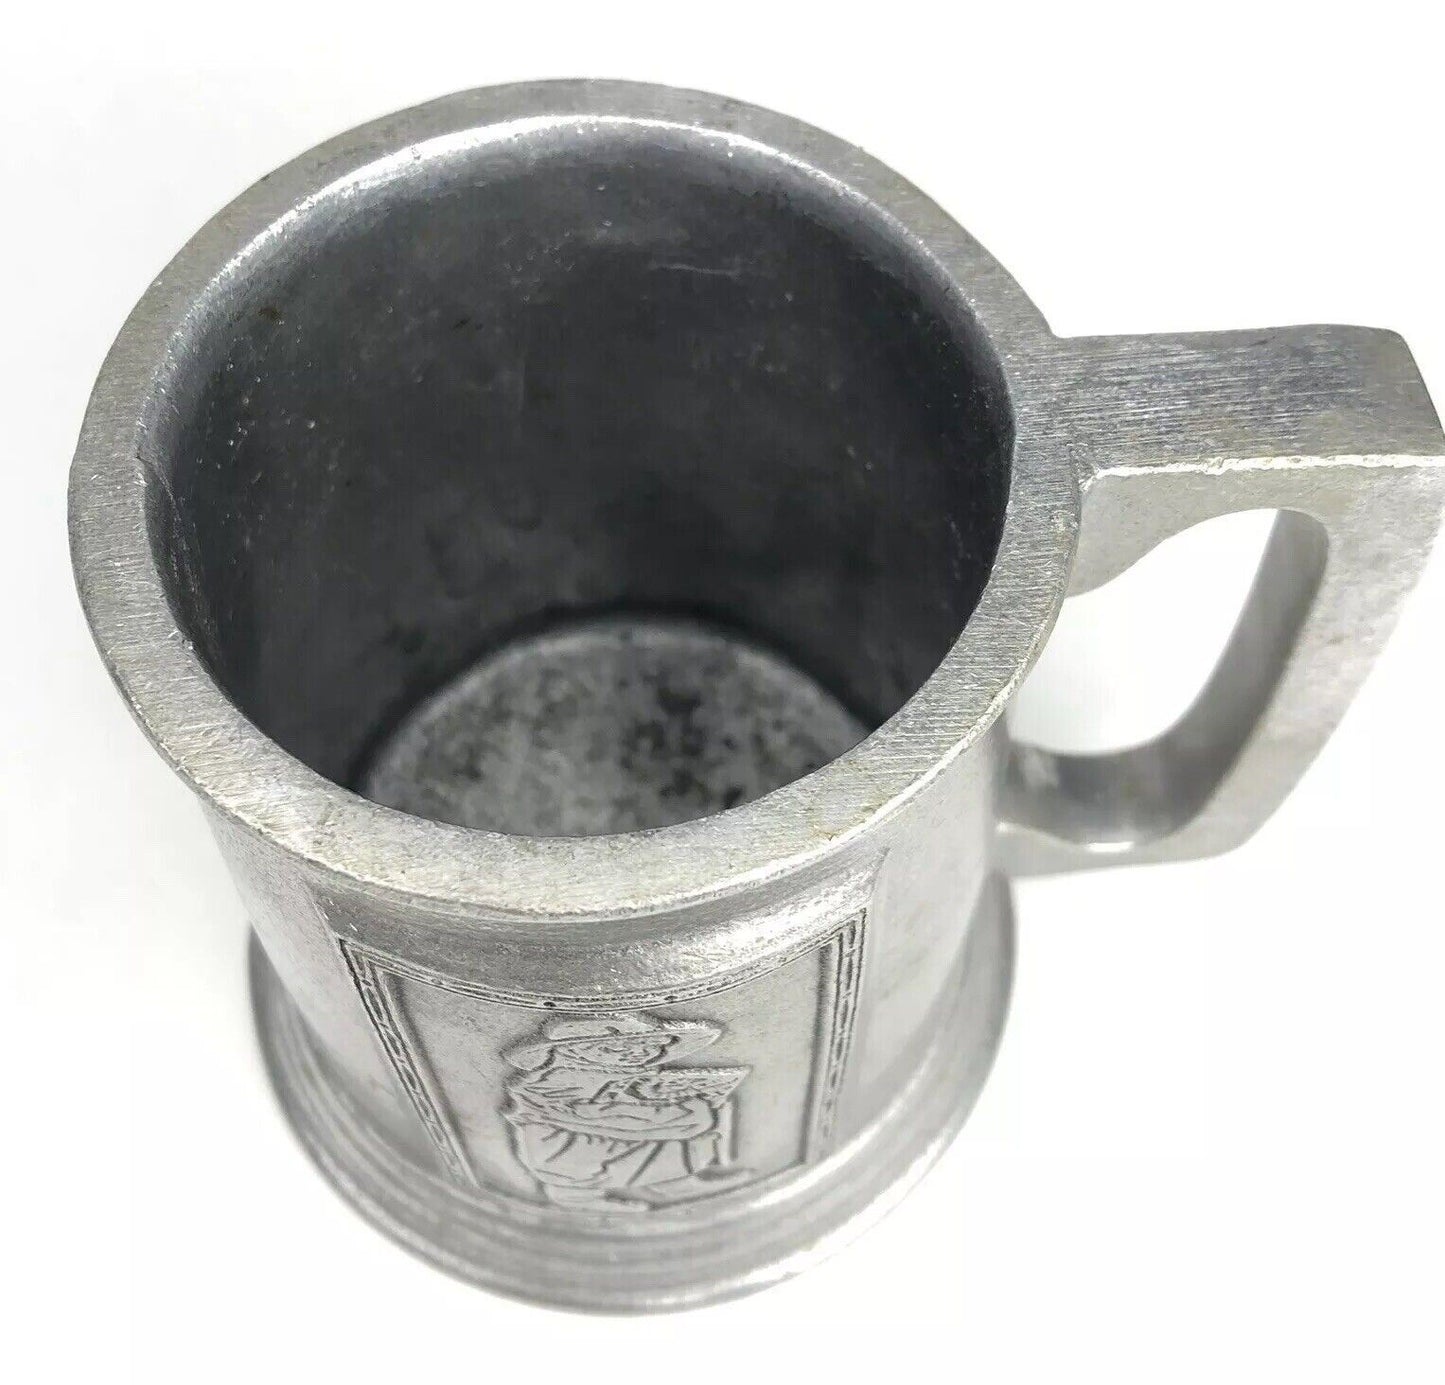 Vintage NABISCO ‘76 Bicentennial 1976 Pewter Mug 100th Ann. Uneeda Buscuit Logo